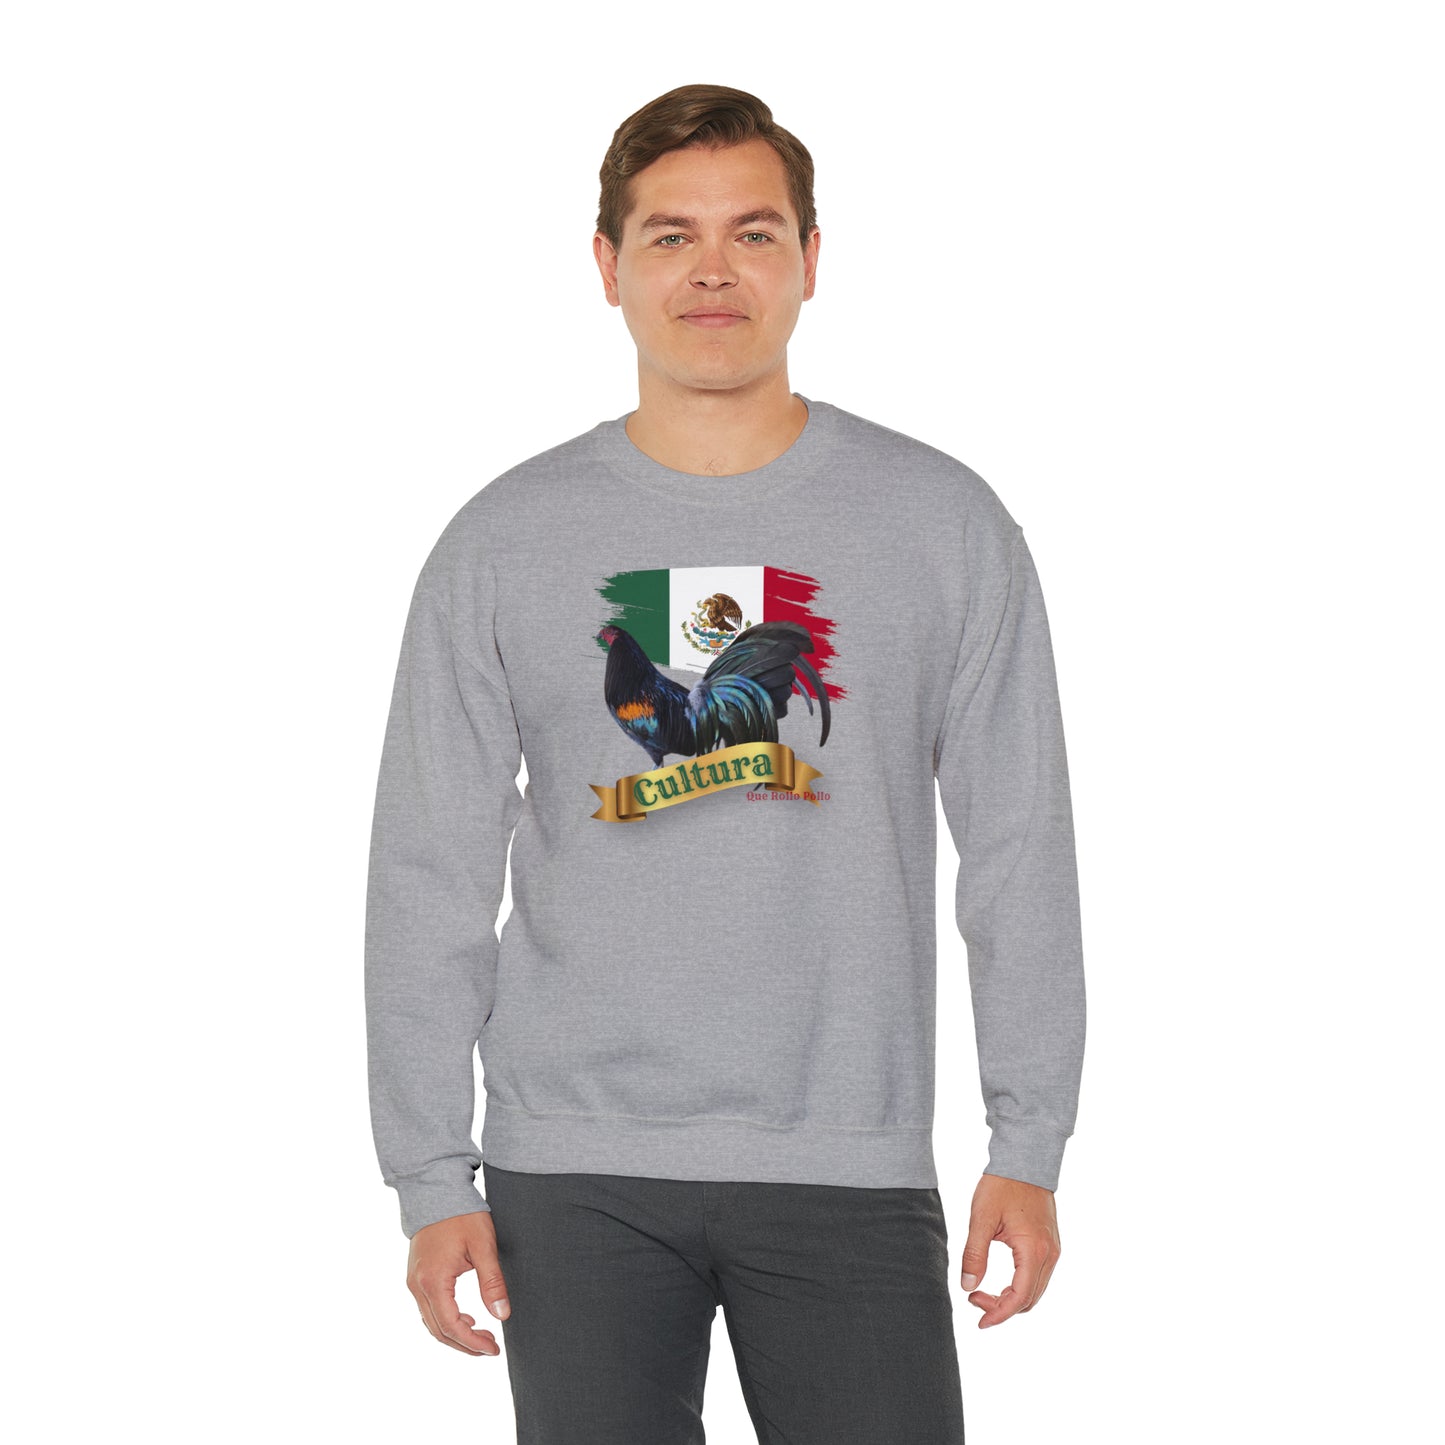 Cultura Gallero Unisex Heavy Blend™ Crewneck Sweatshirt